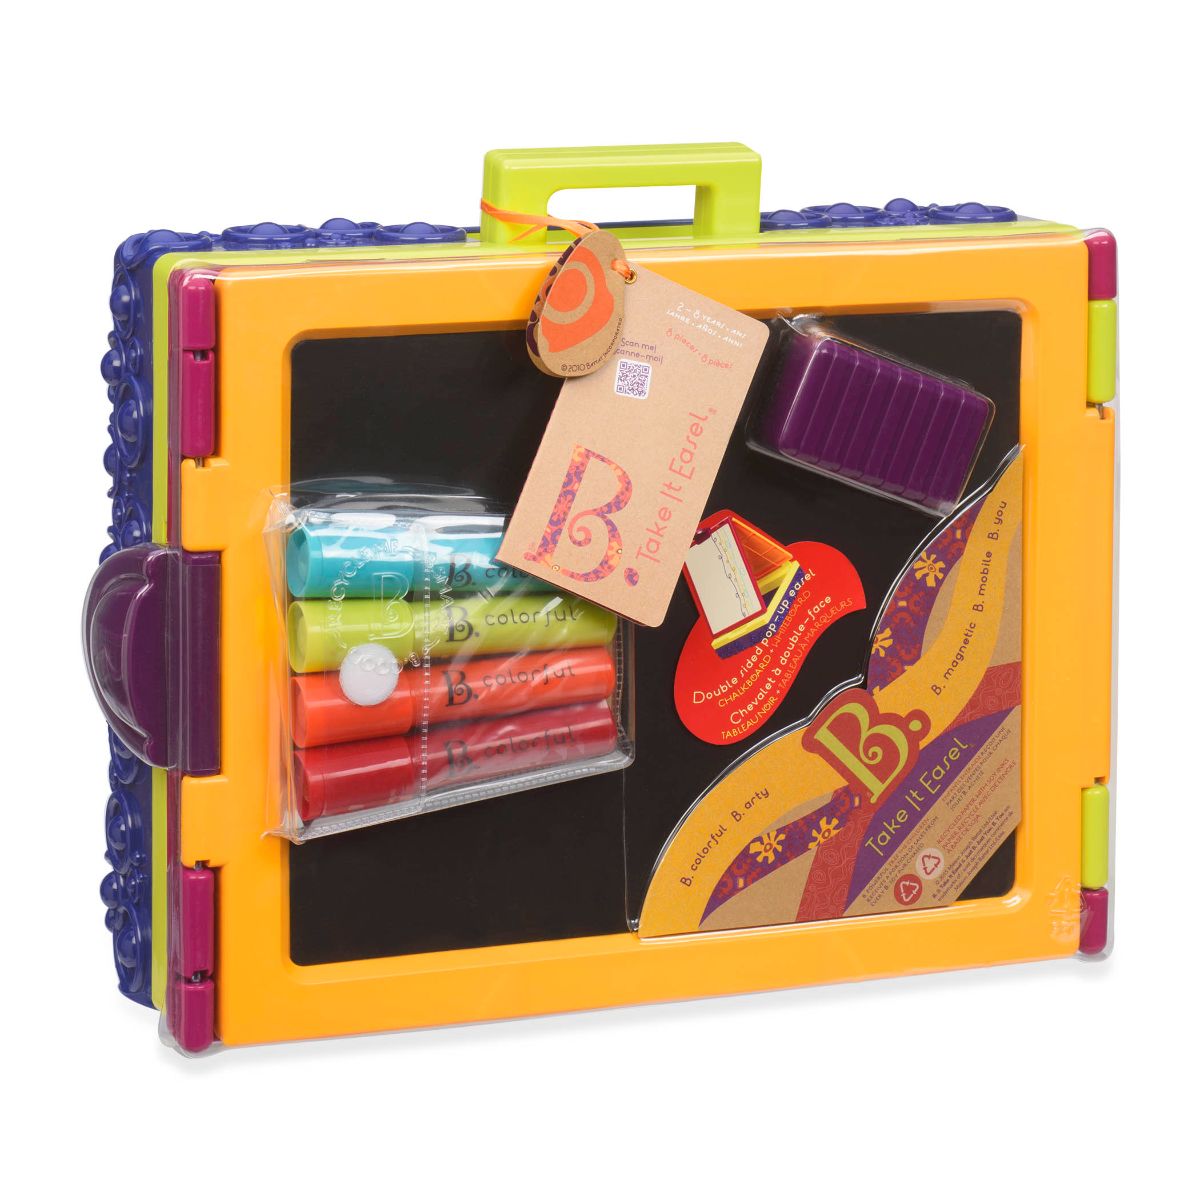 Beka Ultimate Easel with Chalk & Marker Boards - toys et cetera